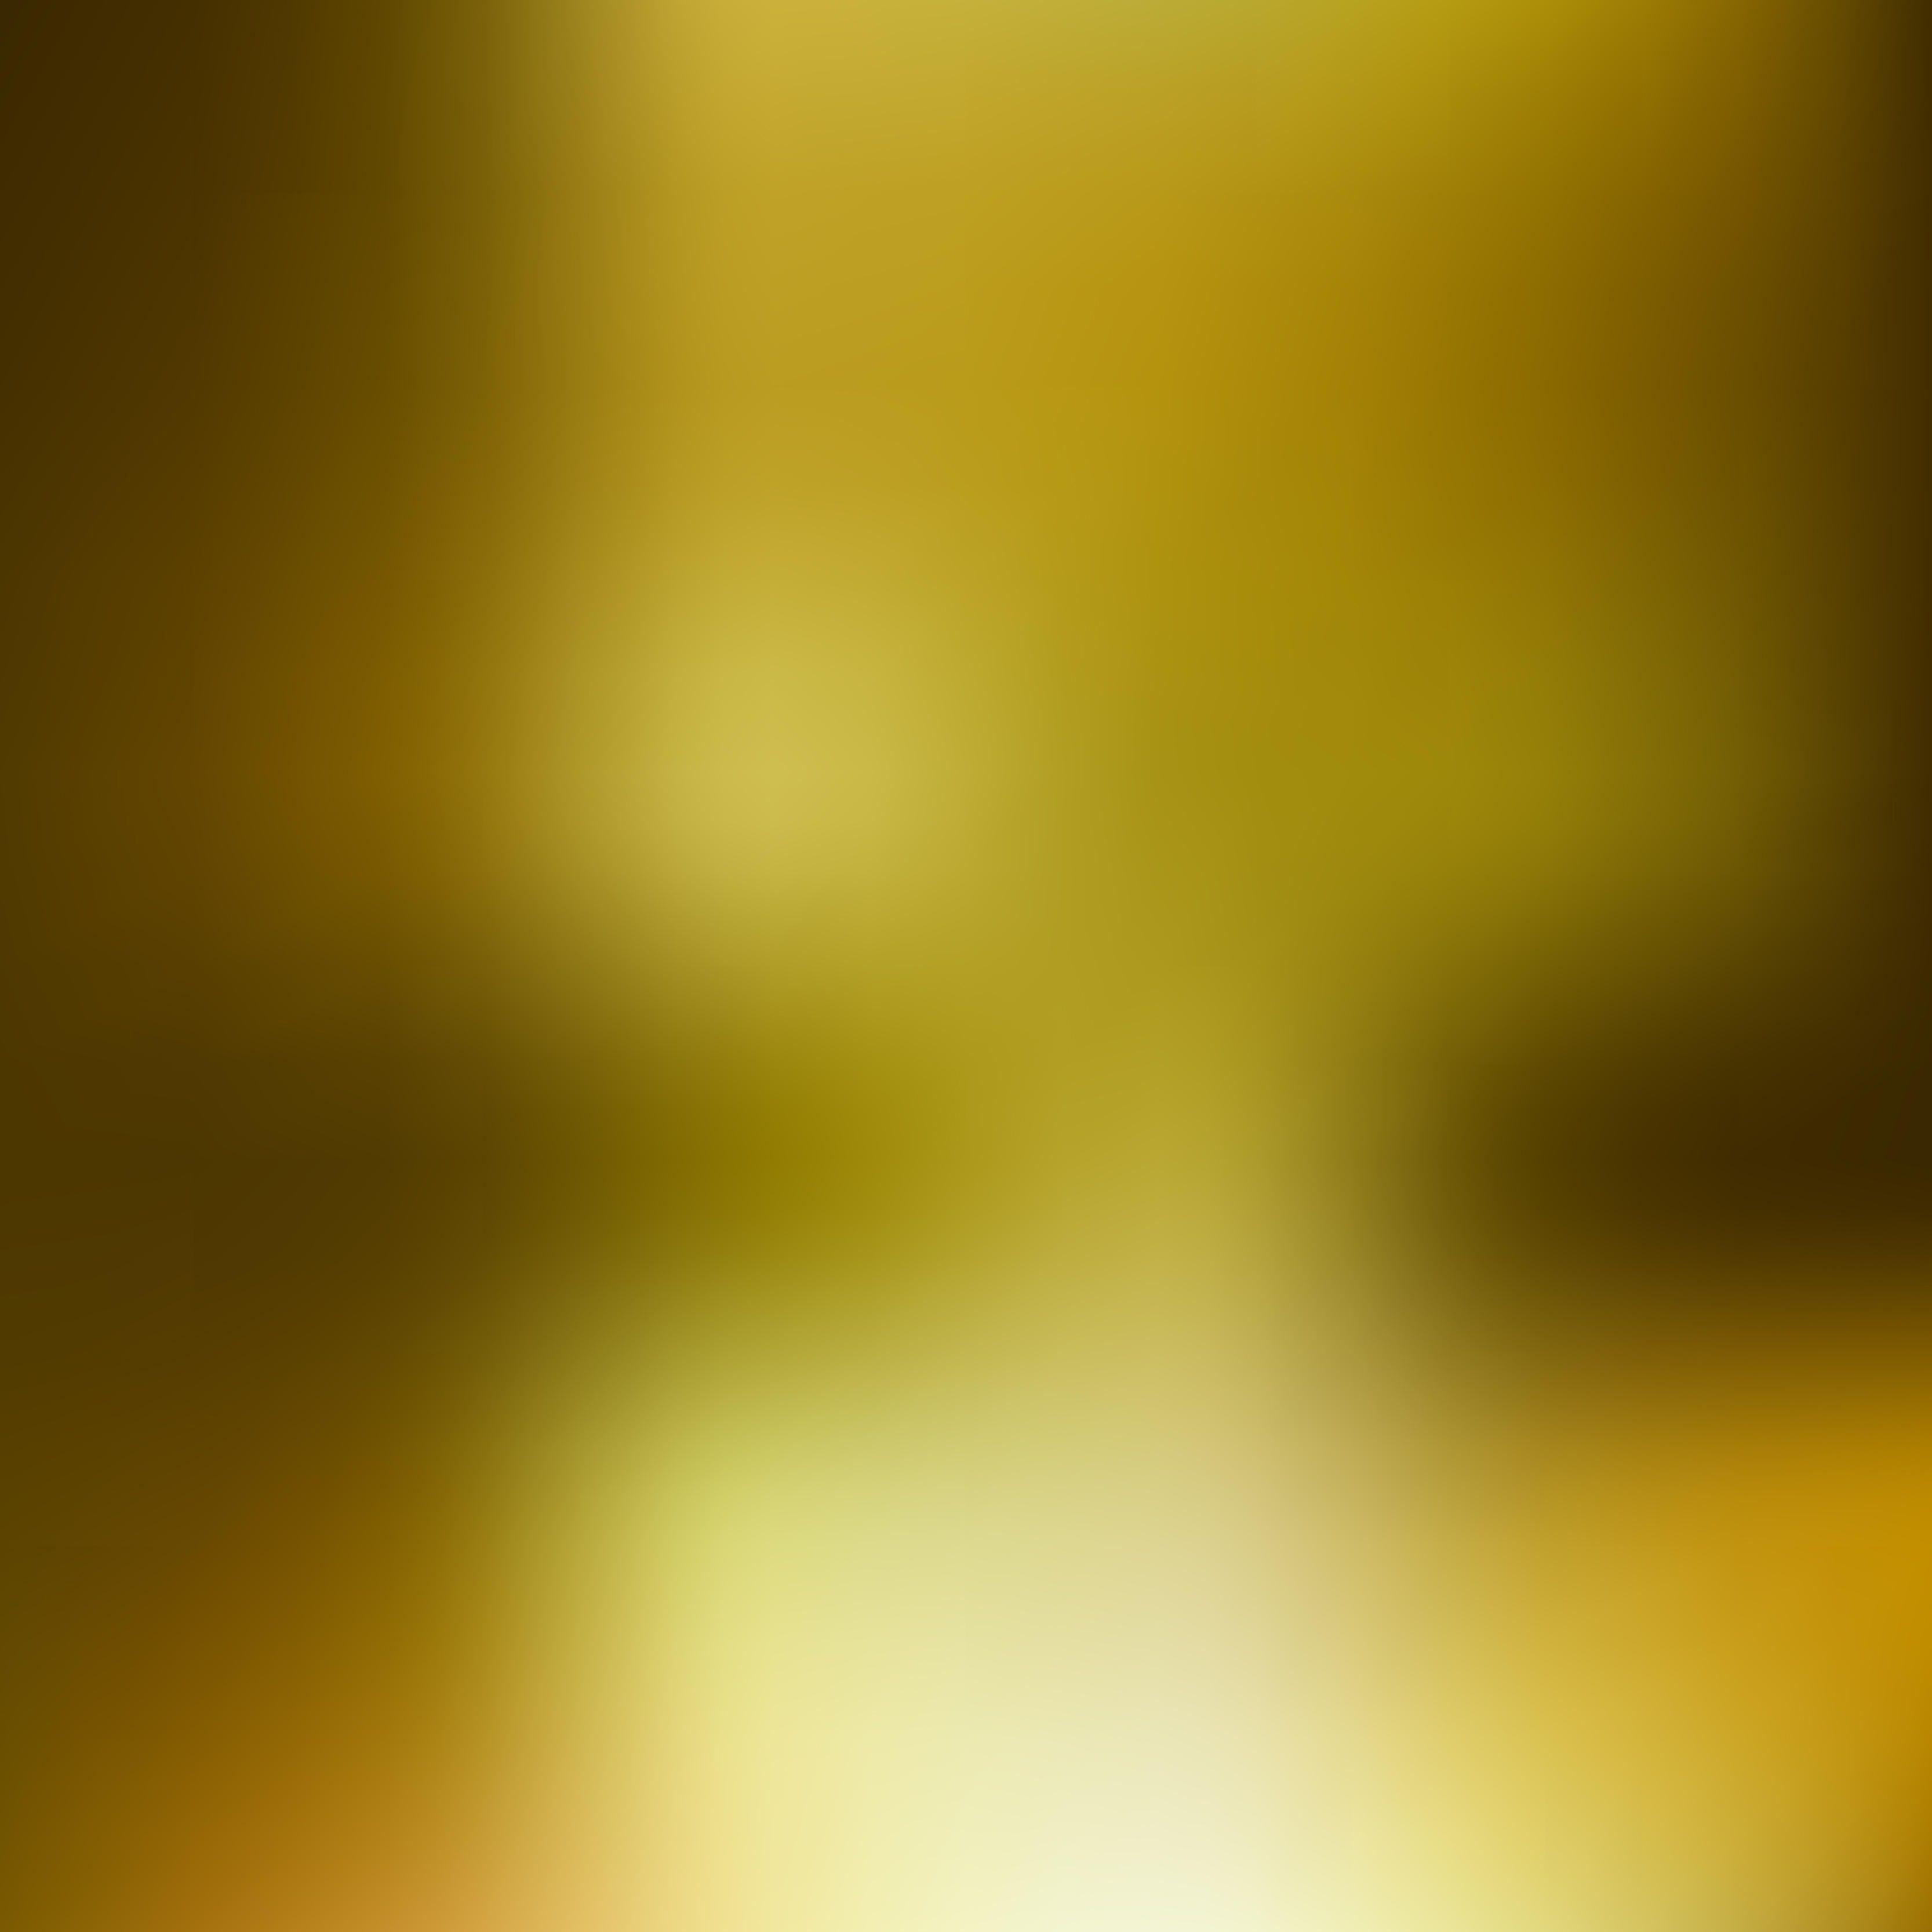 Gold Blurred Lights BackgroundFreevectors